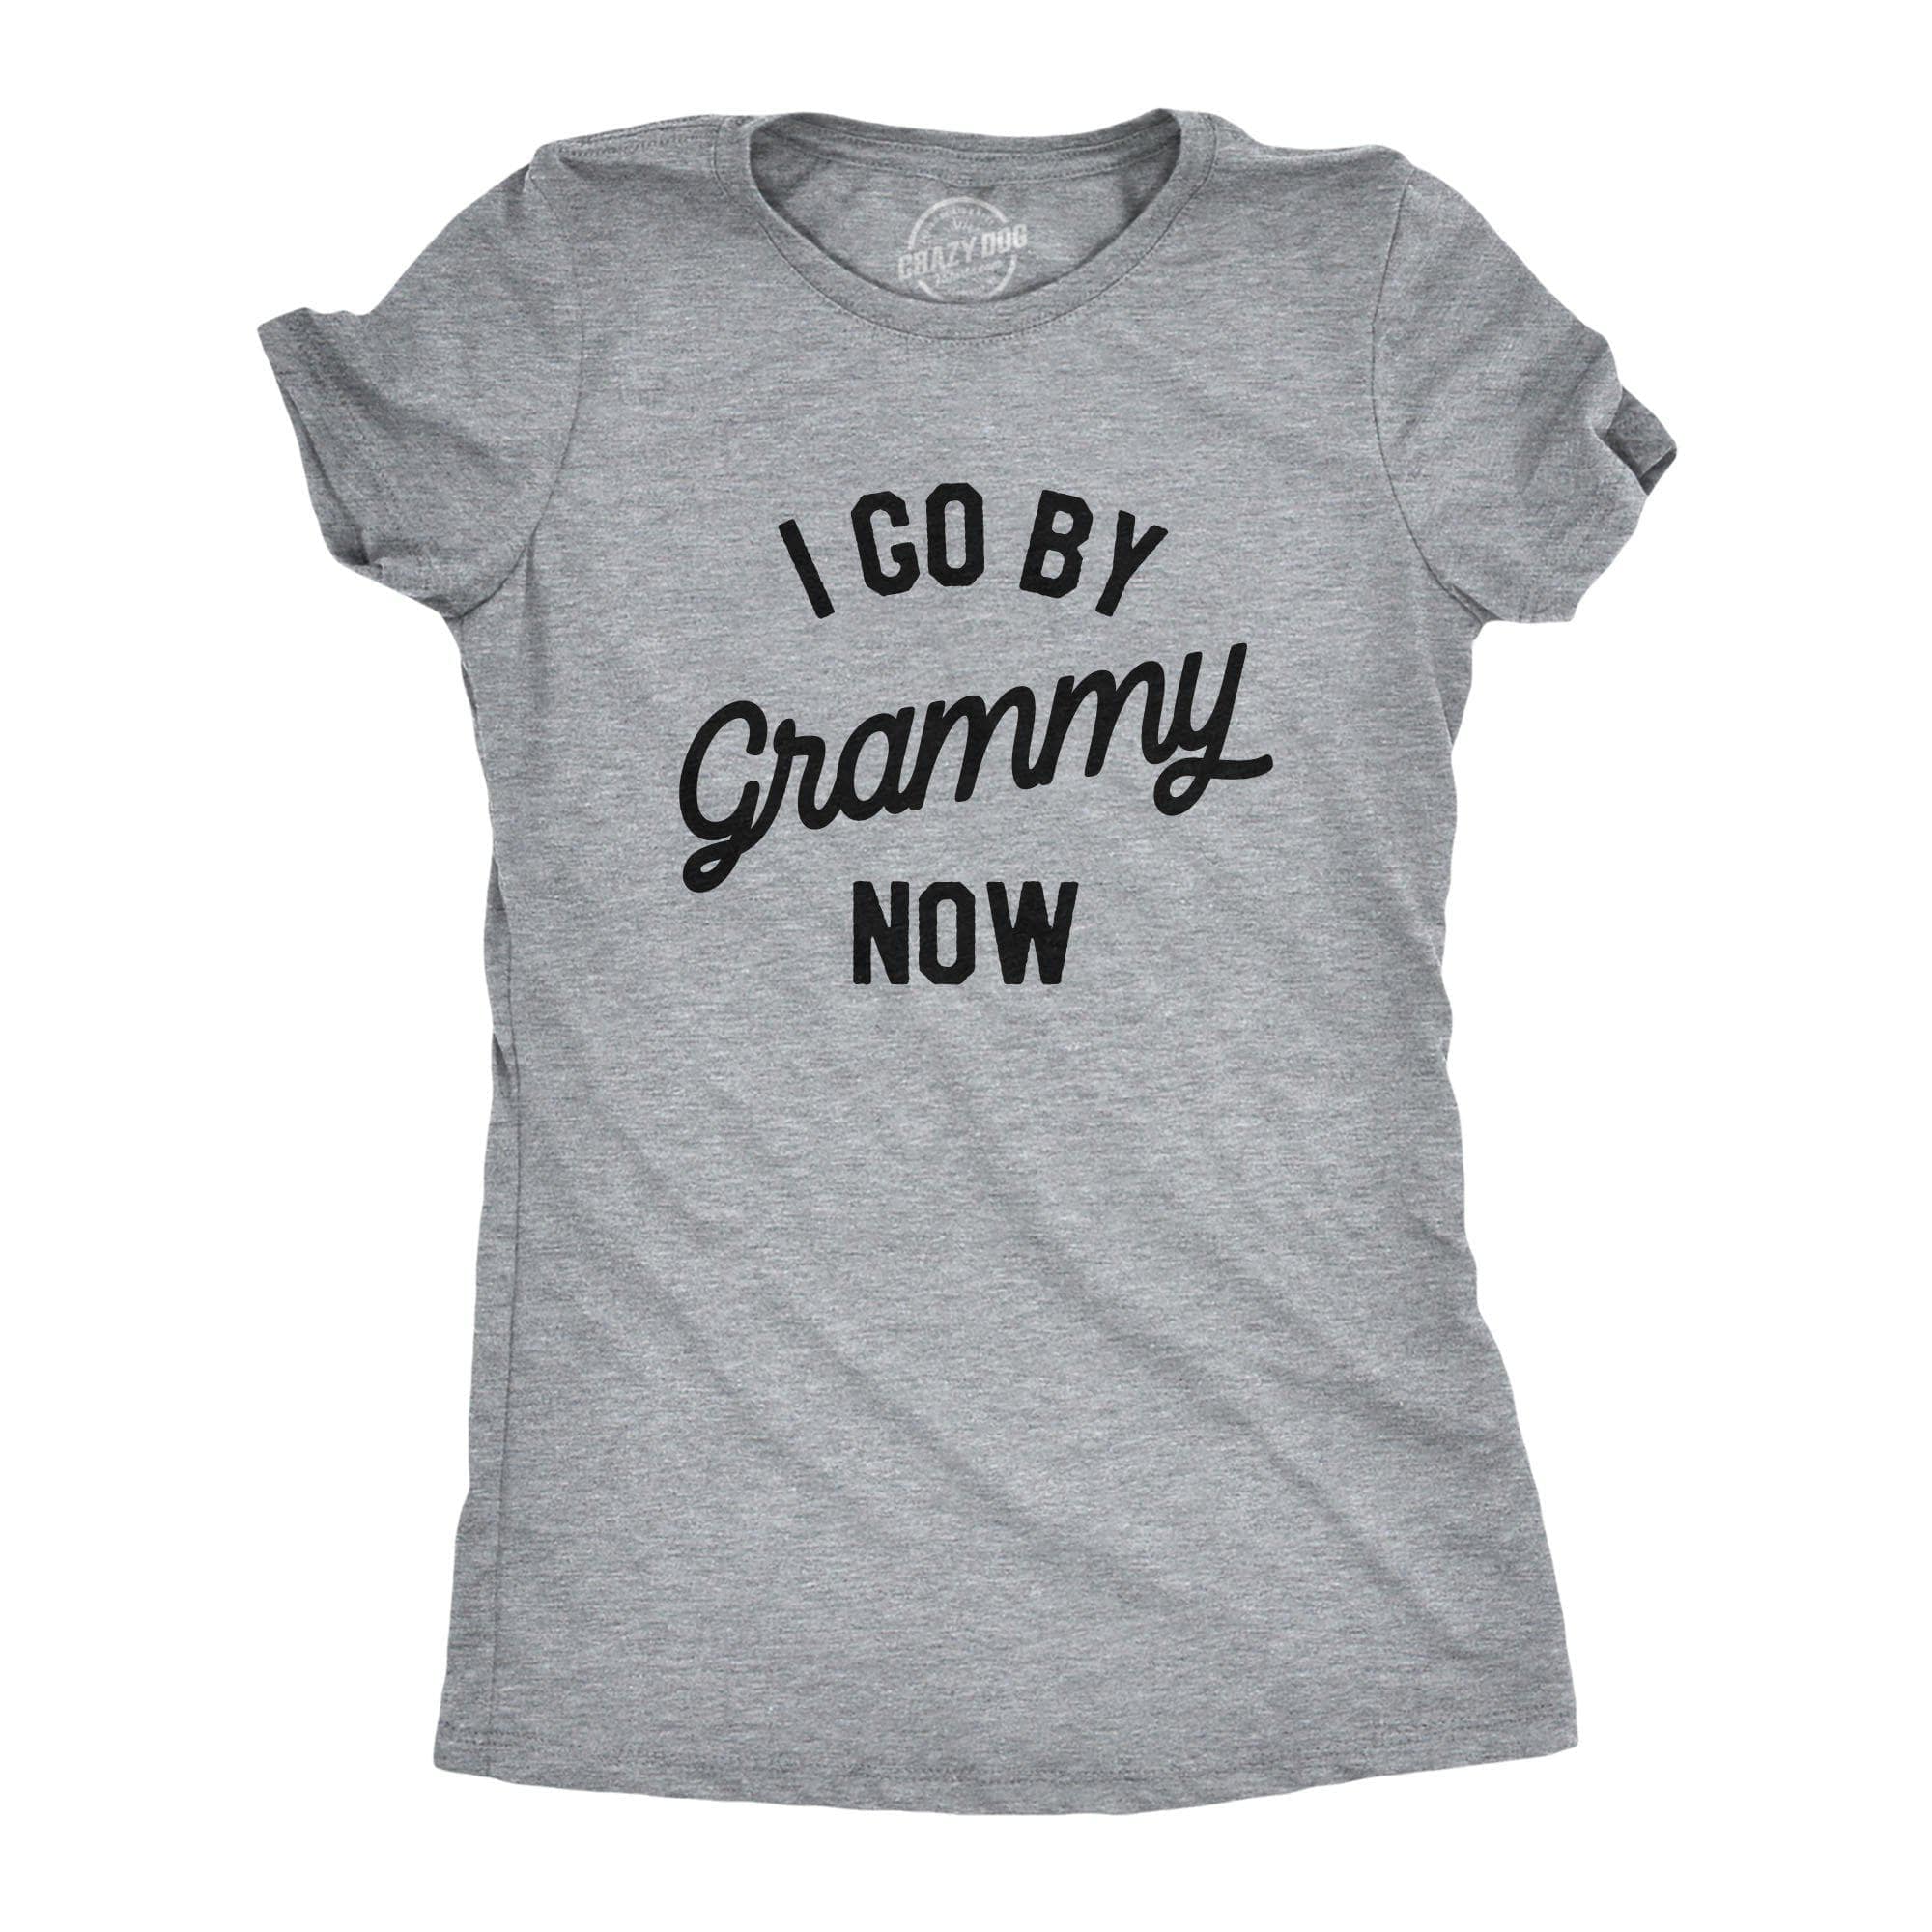 I Go By Grammy Now Women's Tshirt - Crazy Dog T-Shirts